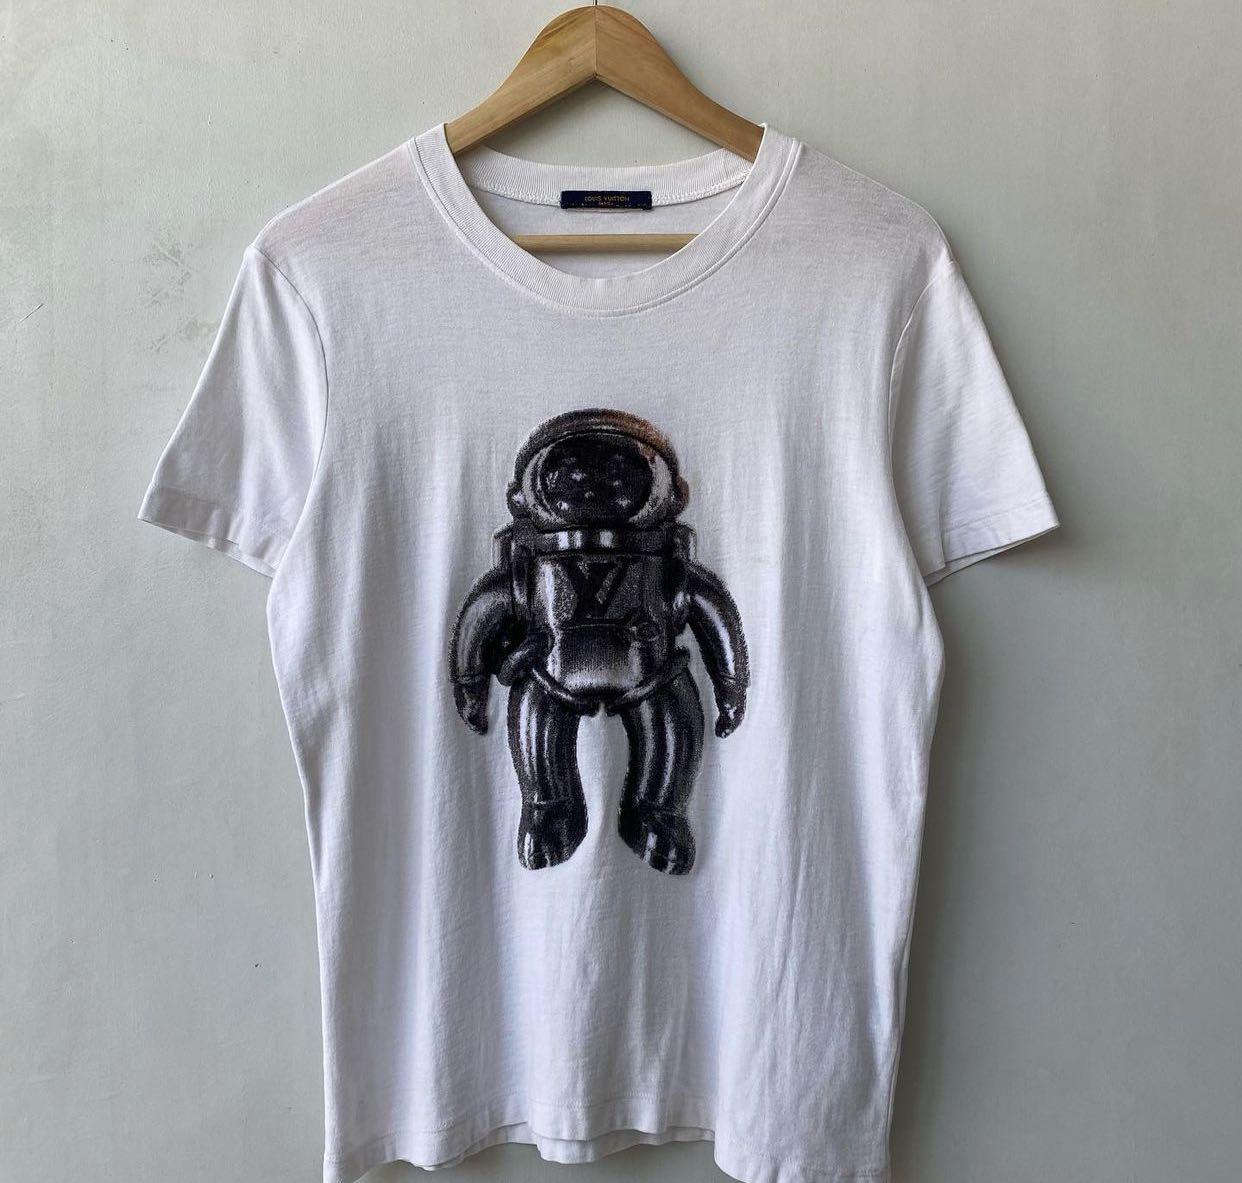 Best Tshirts - Louis Vuitton Spaceman T. Super Clean. Buy Here